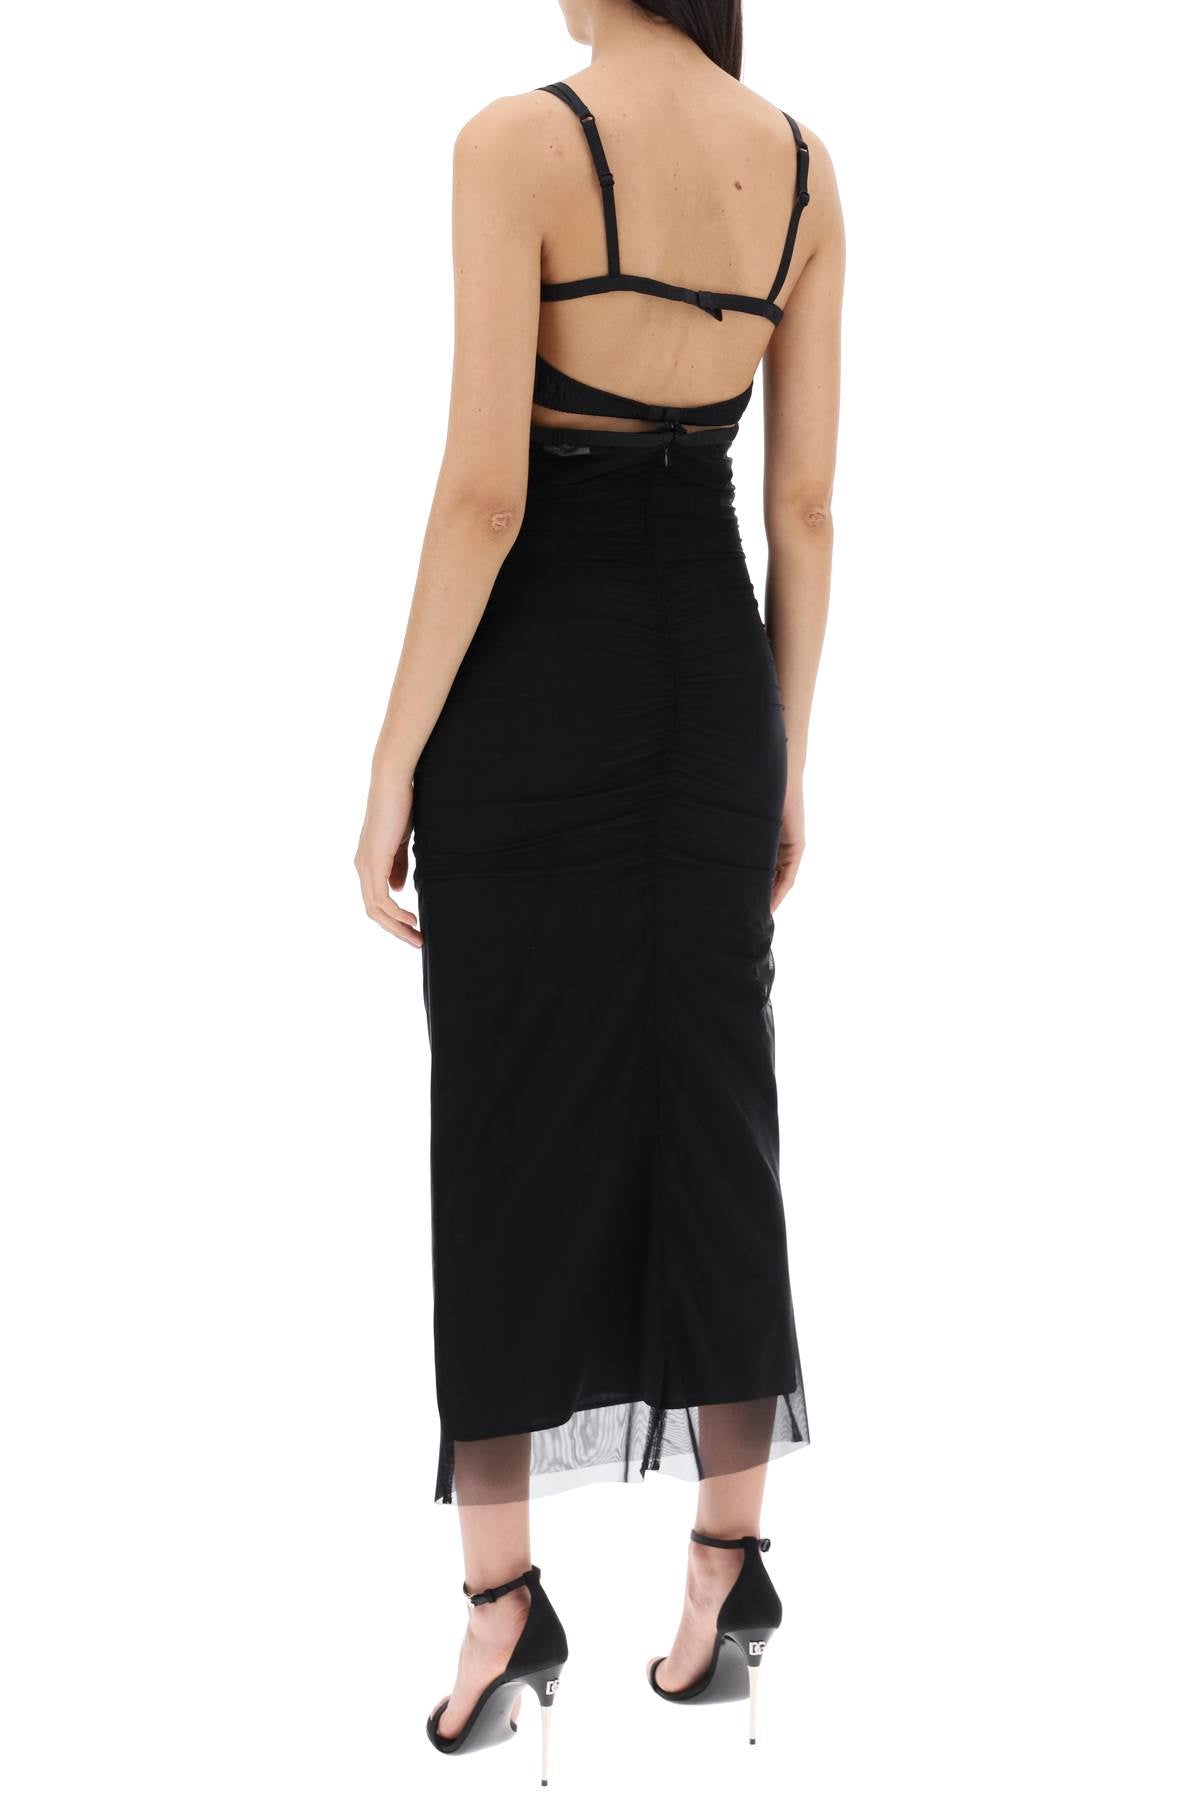 Dolce & Gabbana Midi Dress With Bustier Details   Black